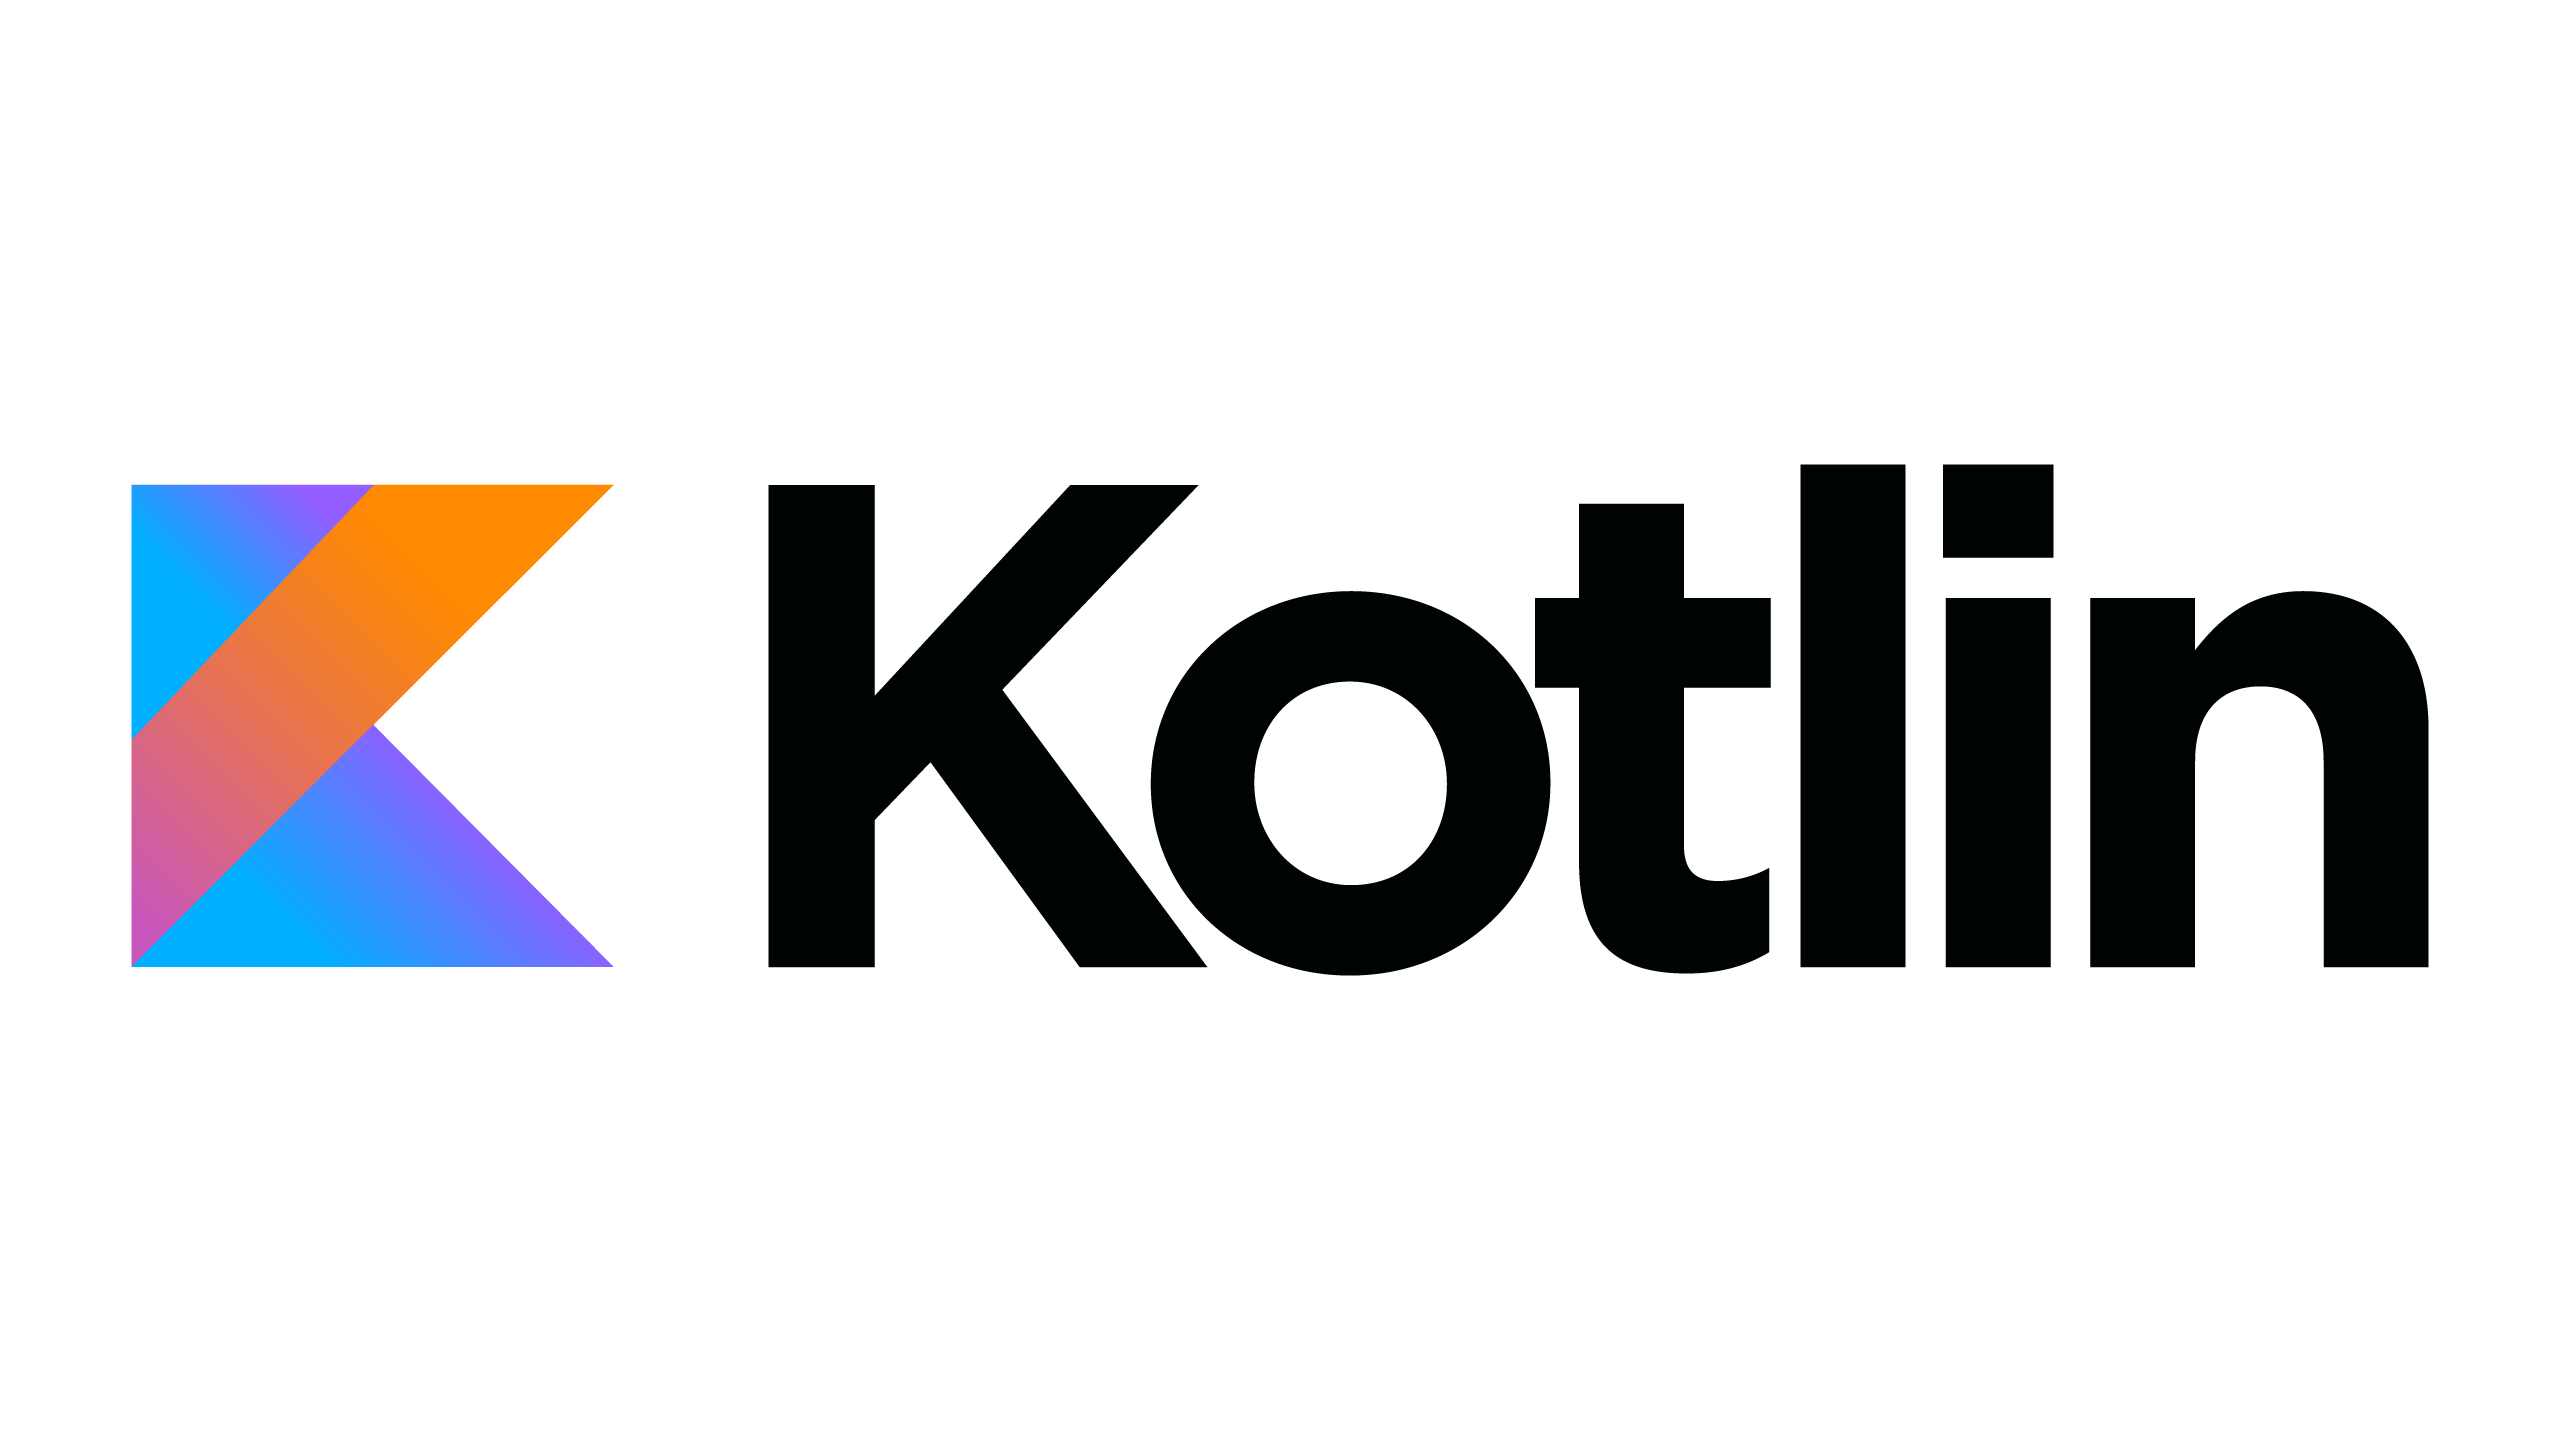 [Android/Kotlin] ContentProvider, ContentResolver 이용해서 연락처 가져오기